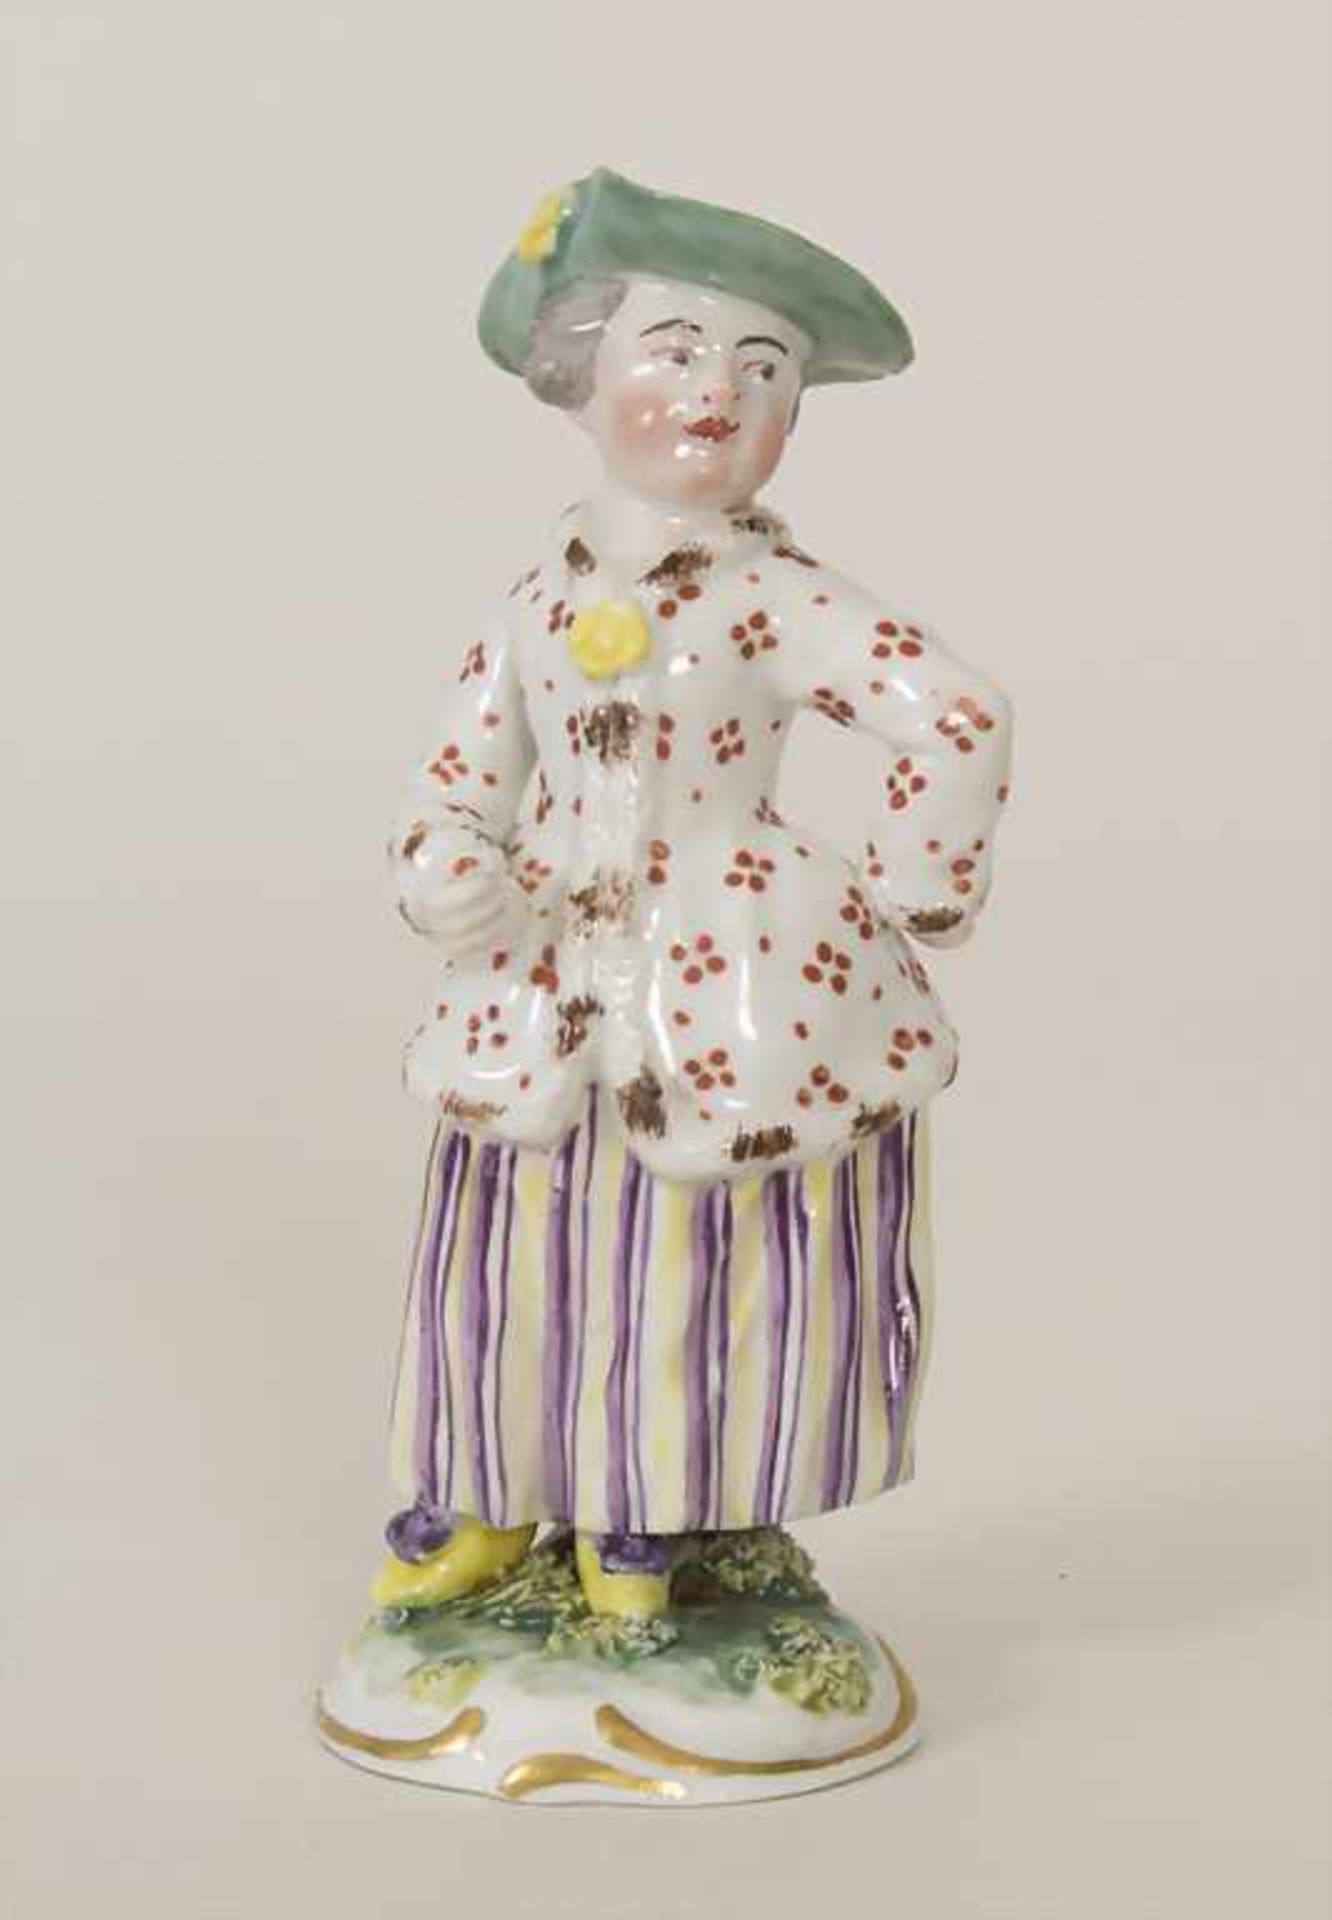 Mädchen / A girl, Frankenthal, 1782Material: Porzellan, glasiert und farbig staffiert,Marke: